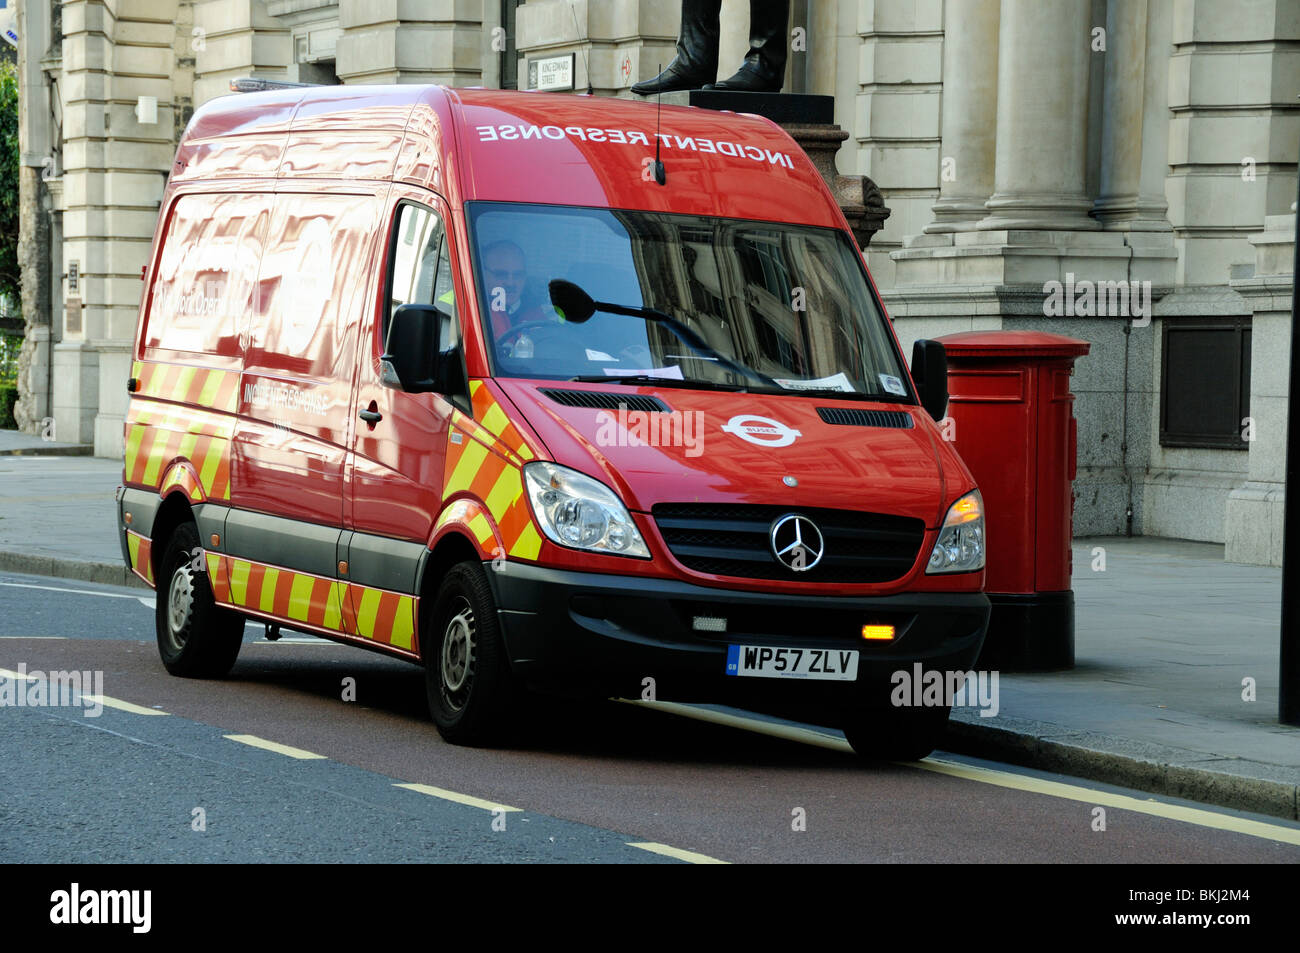 London Buses Incident Response Unit, vehicle, City of London, England UK Stock Photo